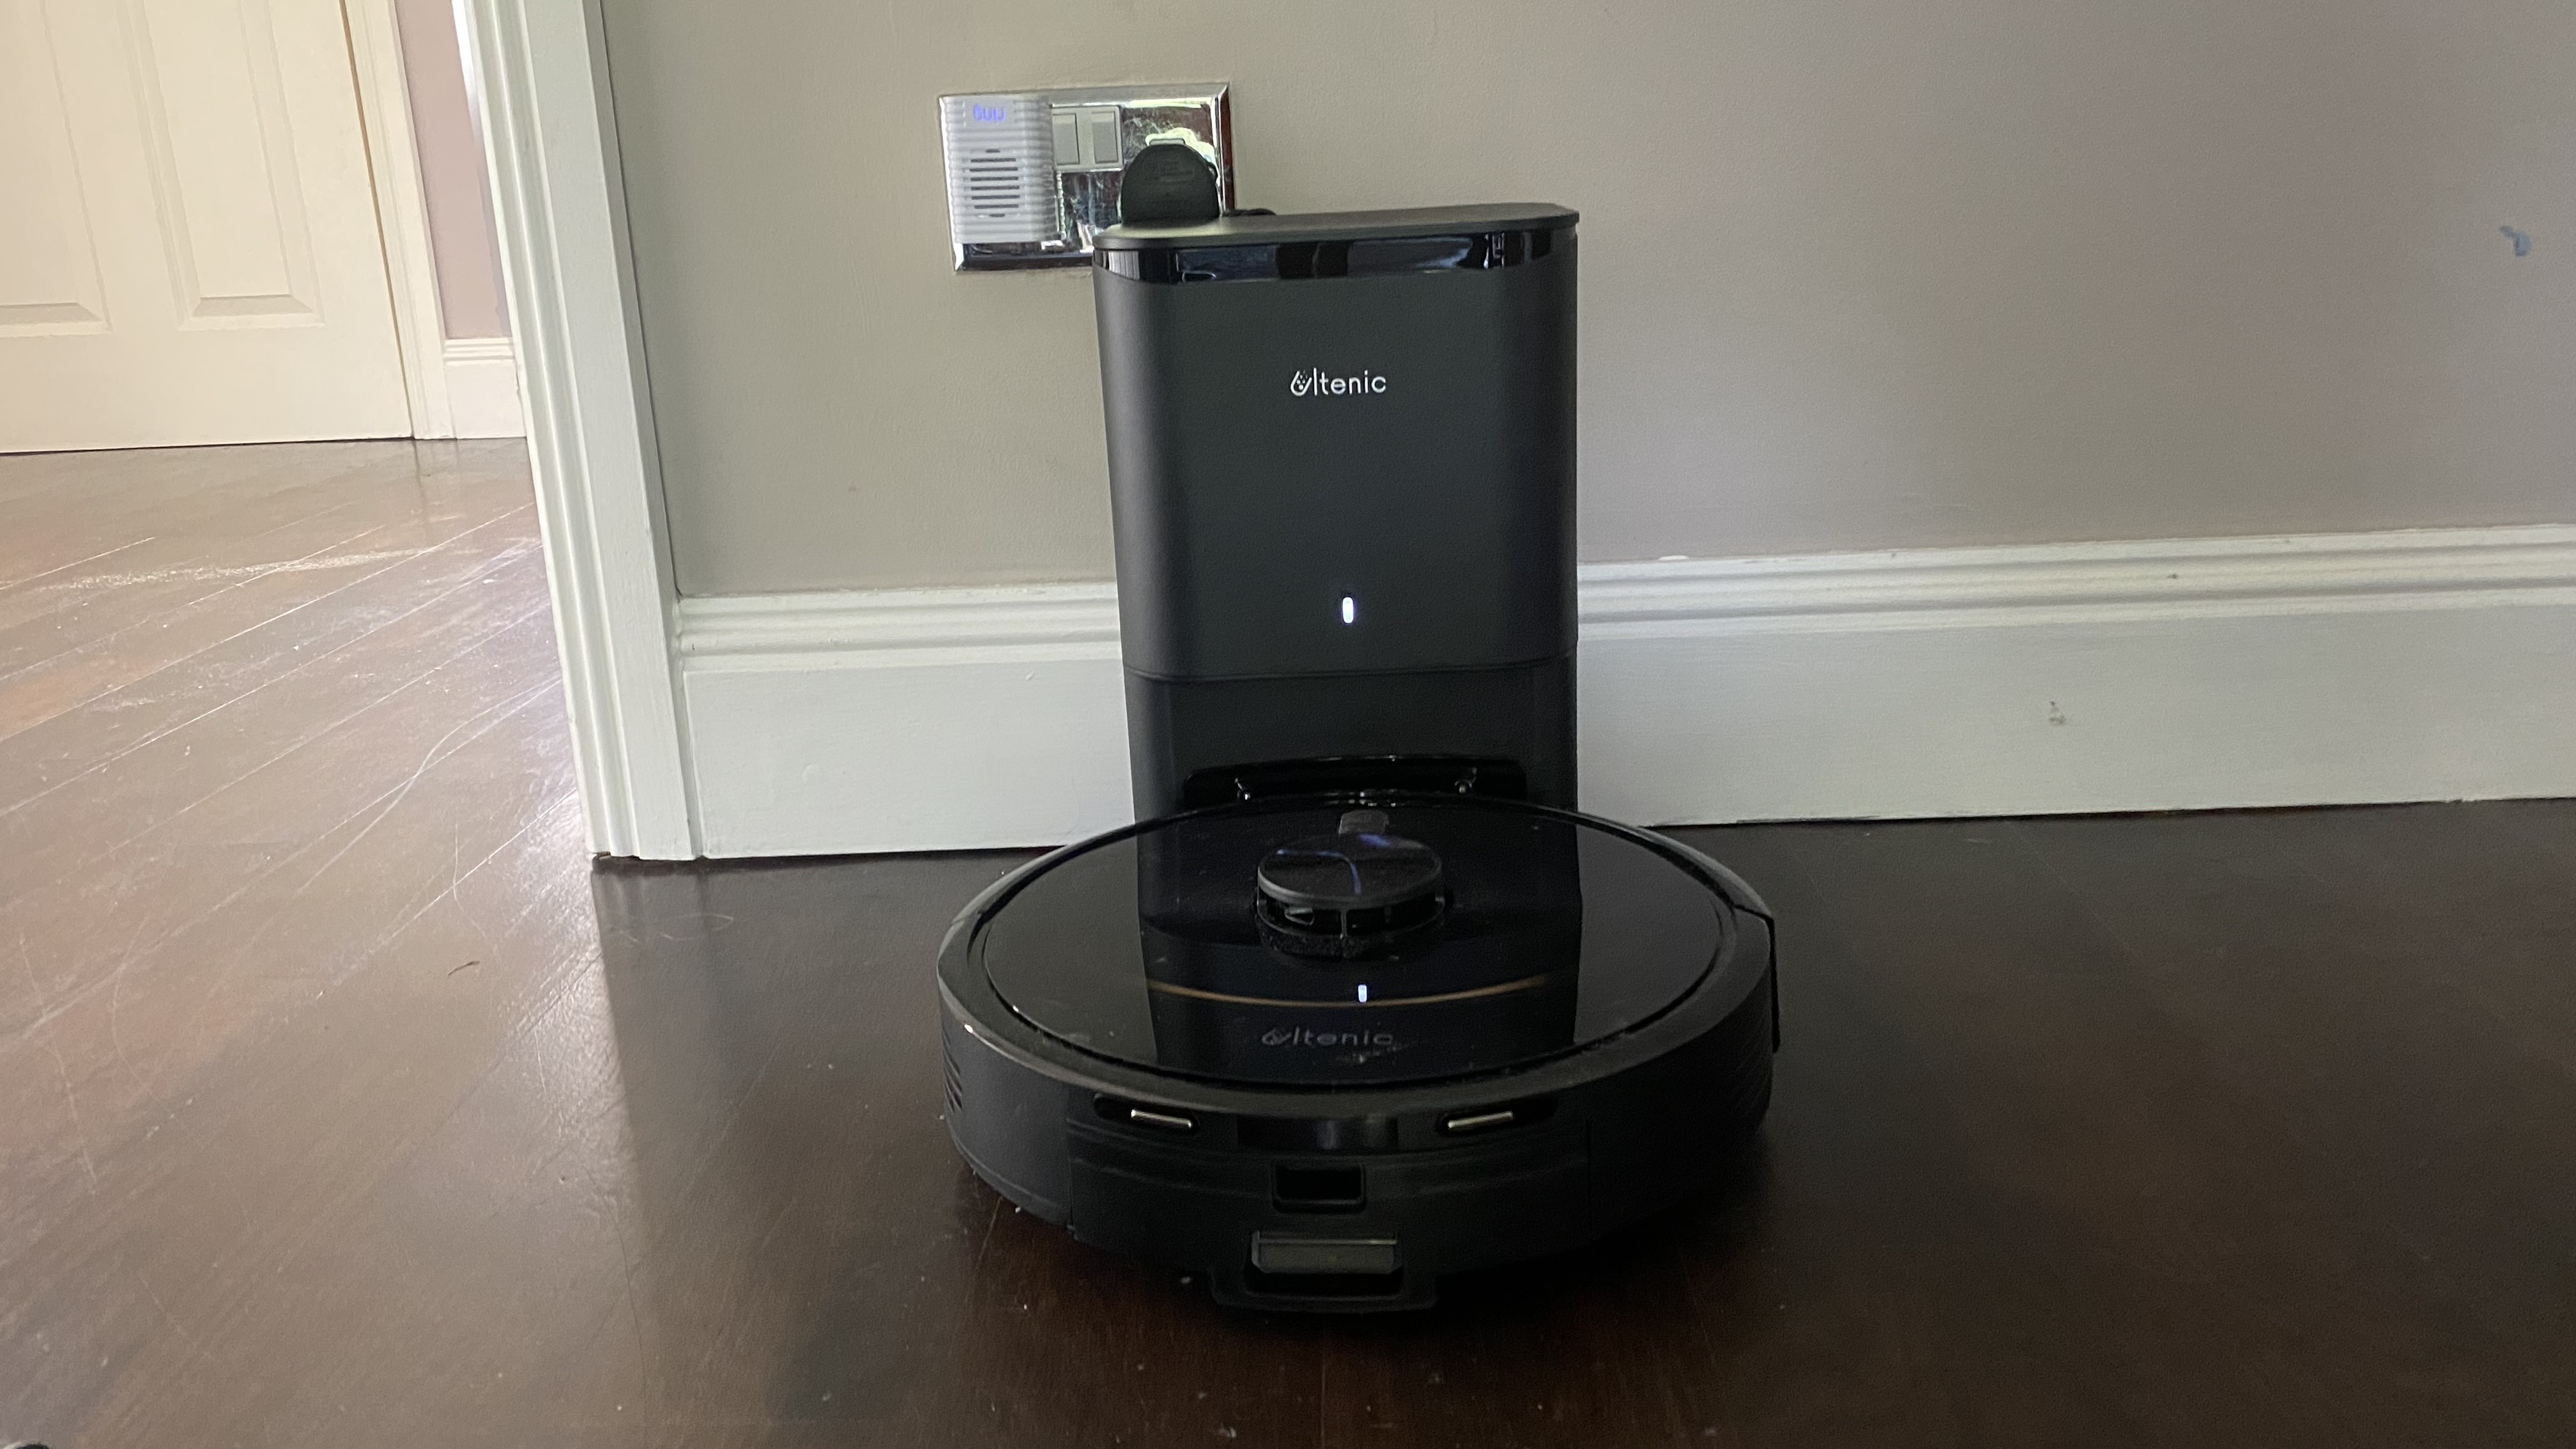 Ultenic T10 Elite robot vacuum and mop review